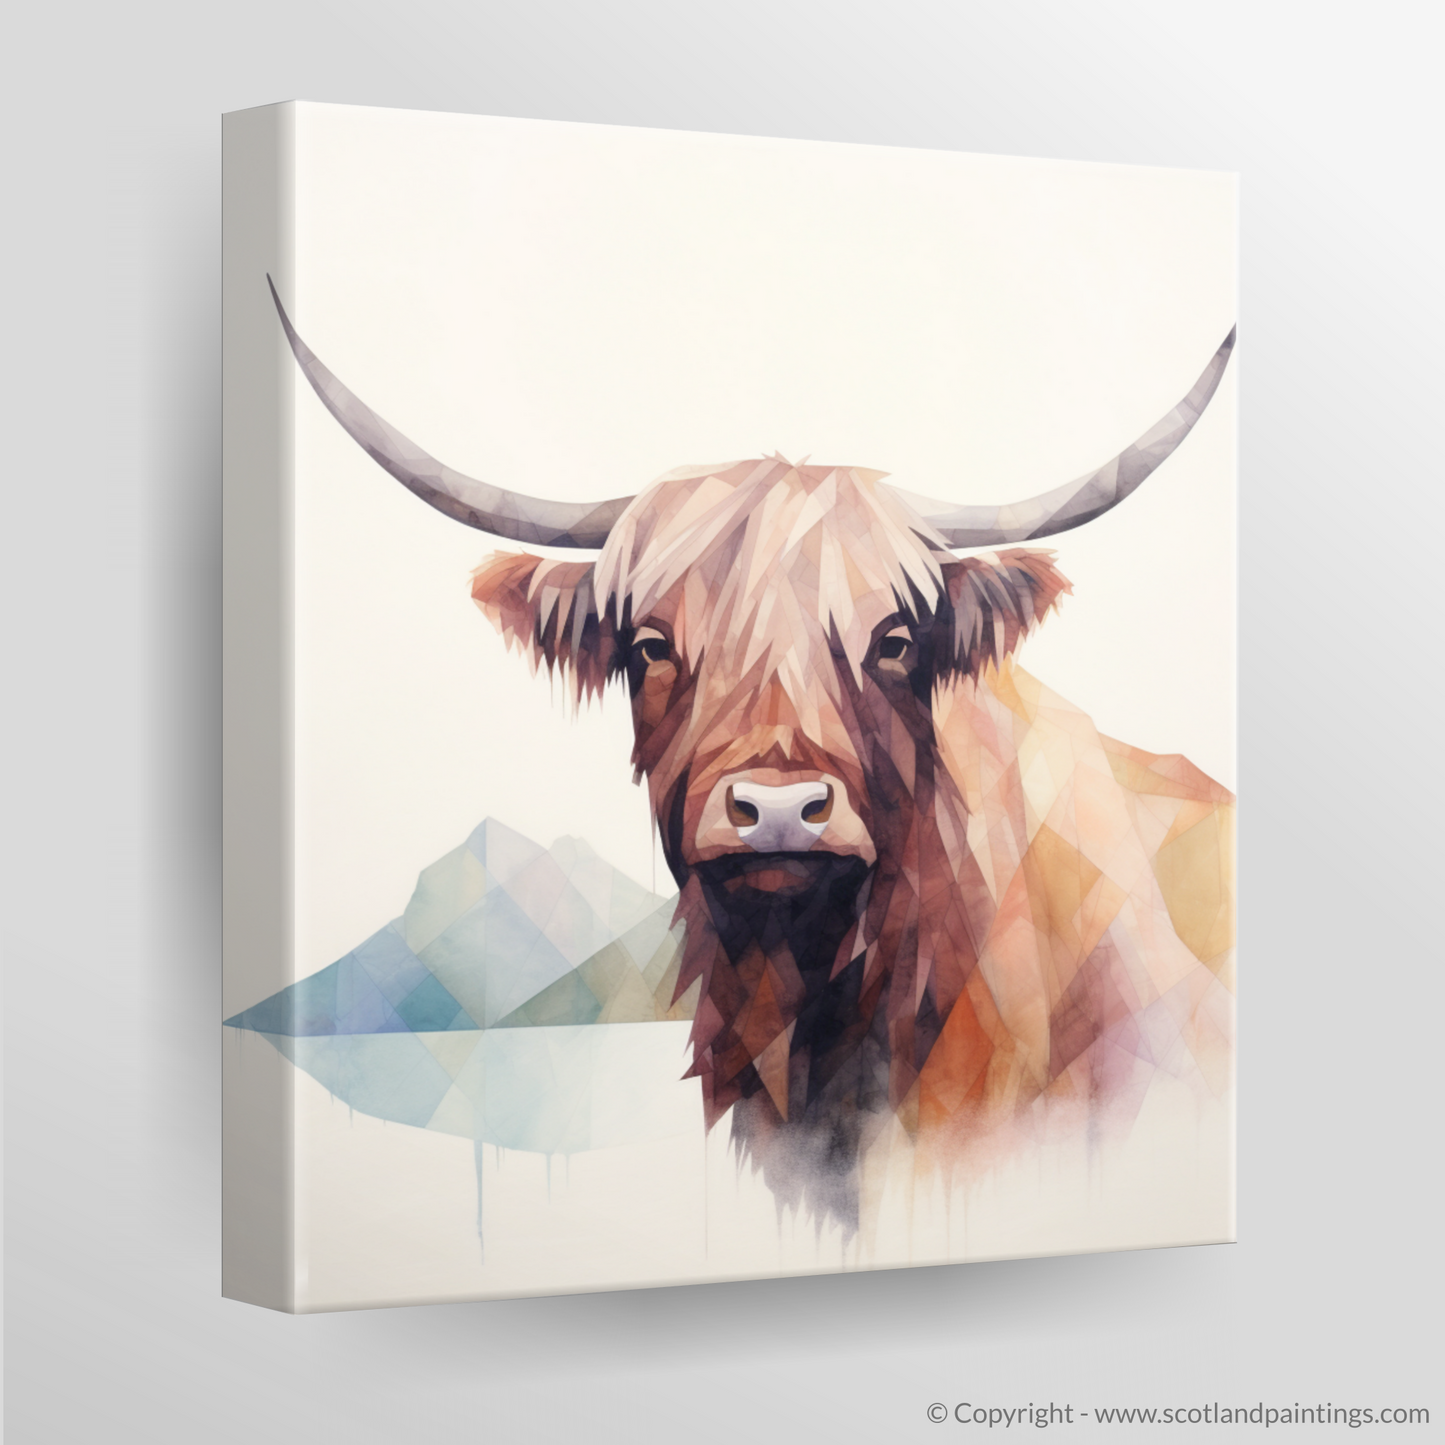 Highland Elegance: A Minimalist Homage to Scotland's Majestic Cow